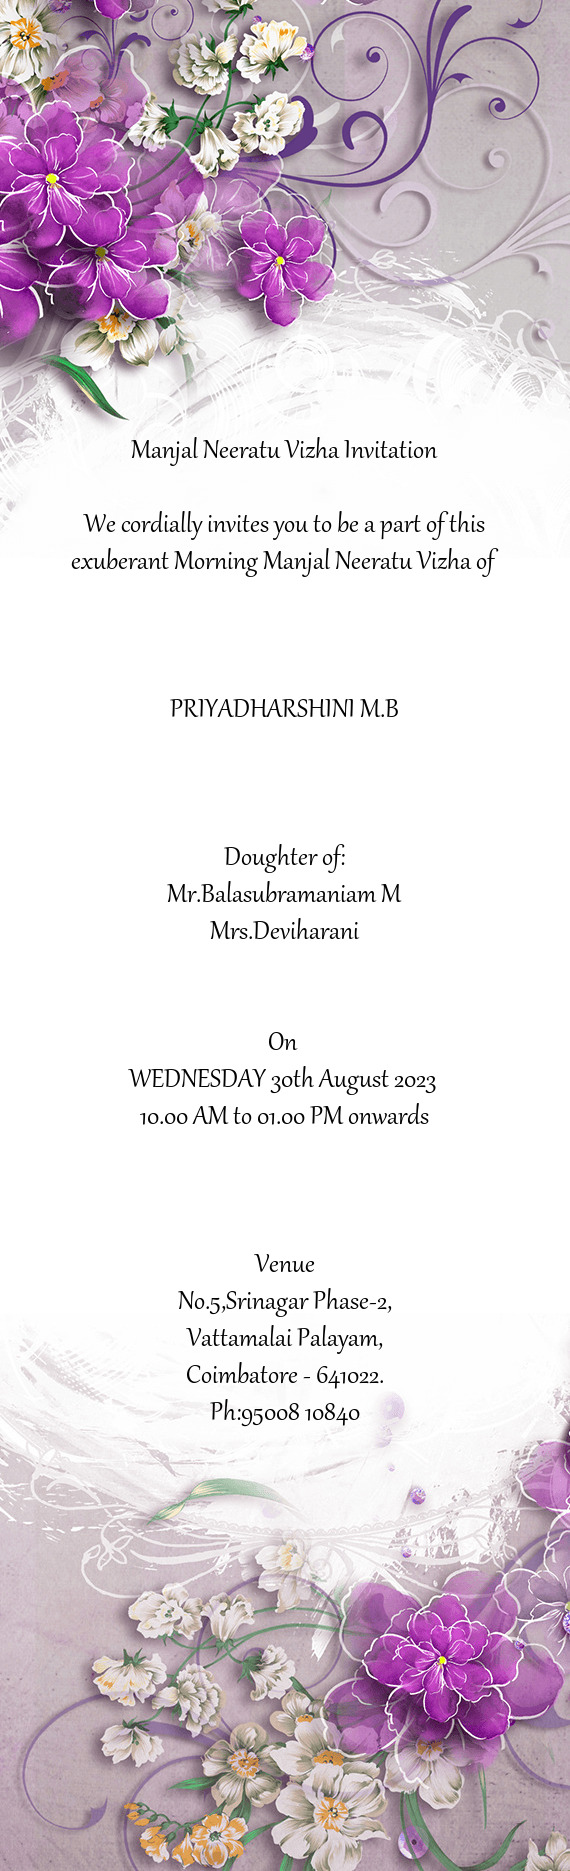 PRIYADHARSHINI M.B